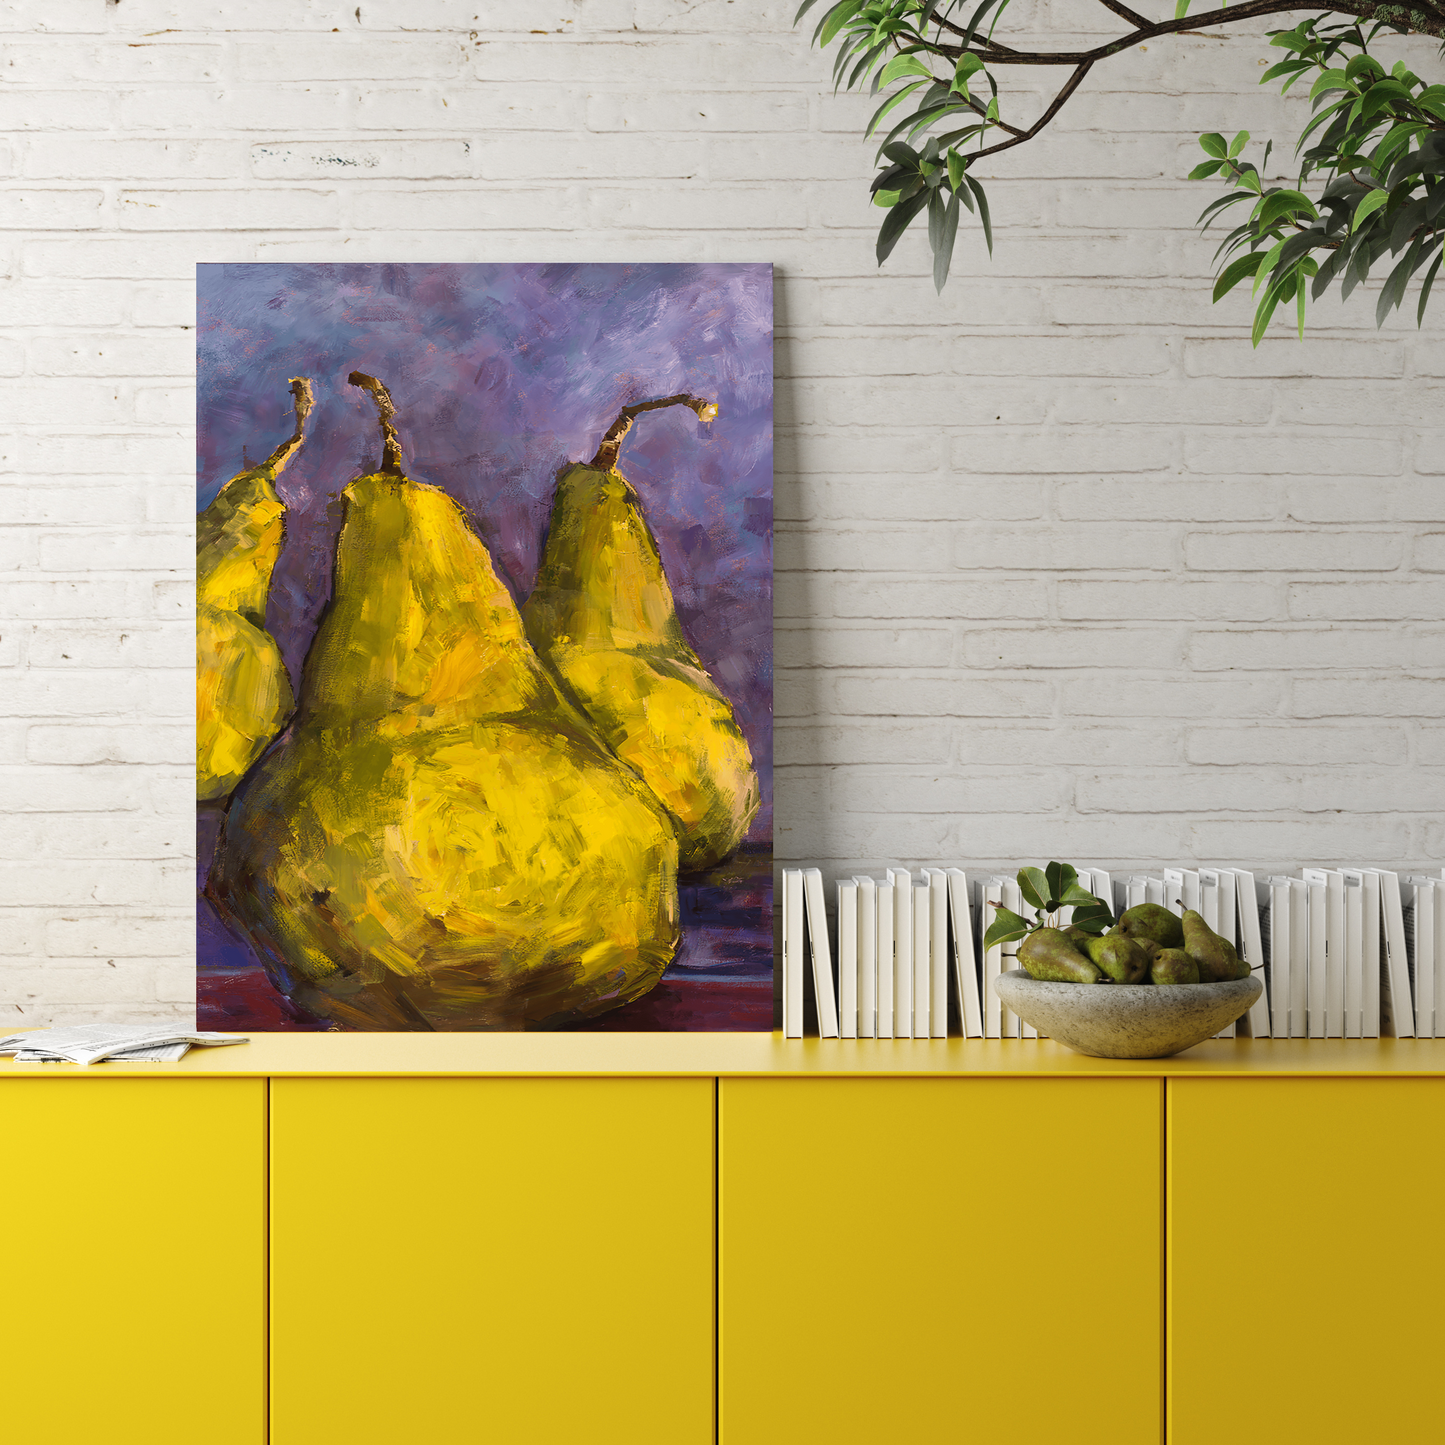 Pears with Purple Artist Enhanced Canvas Print